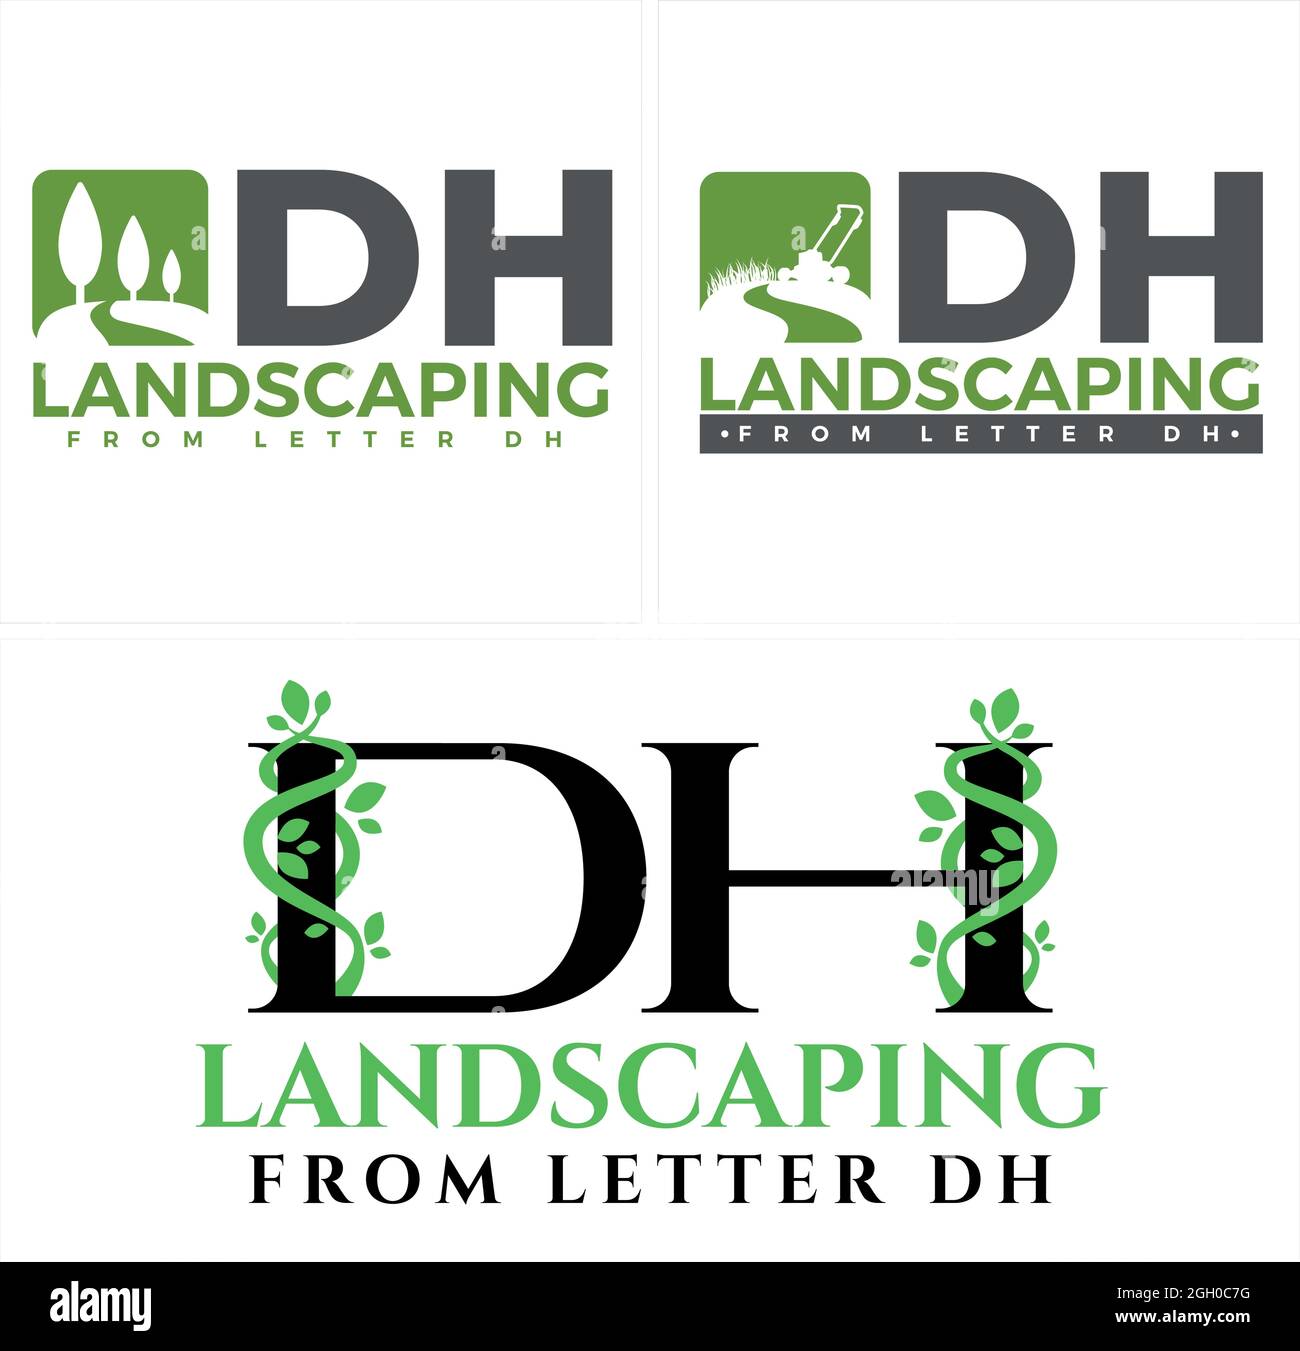 Landscaping lawn mower logo design Stock Vector